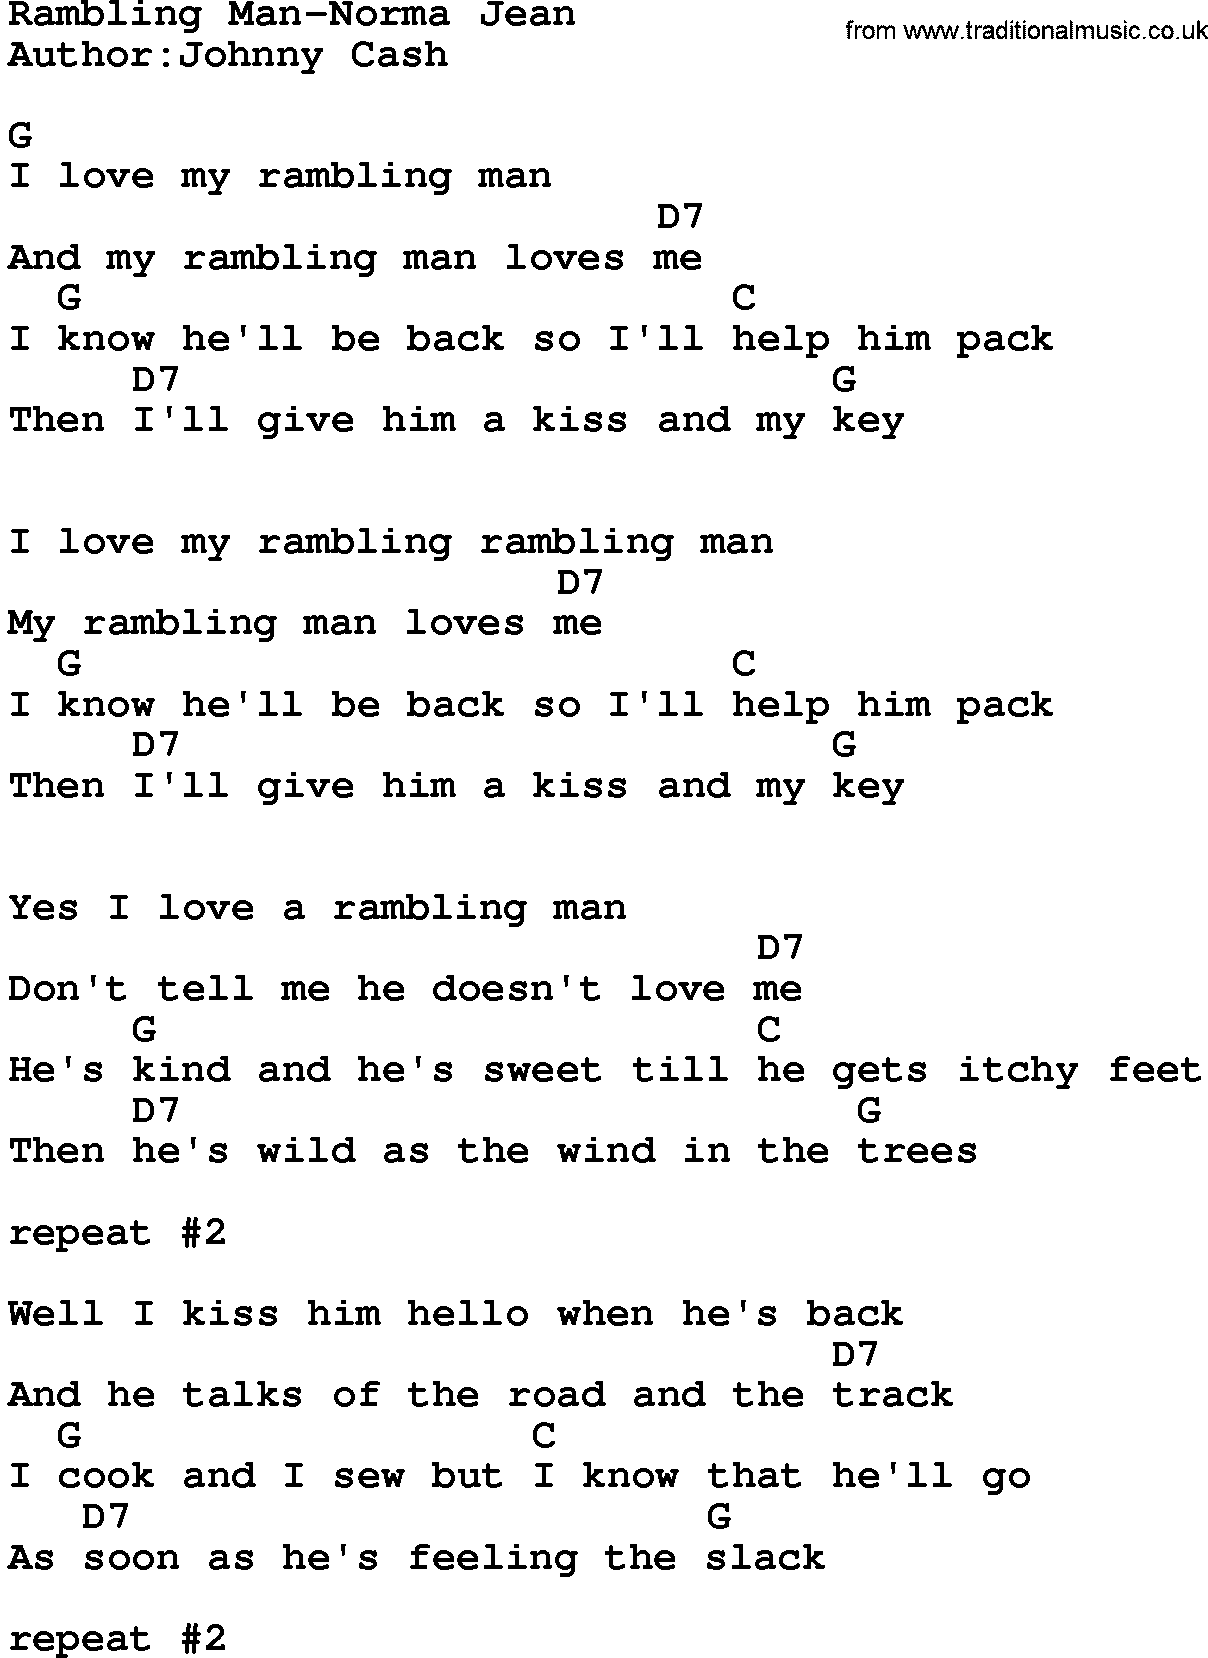 Country music song: Rambling Man-Norma Jean lyrics and chords